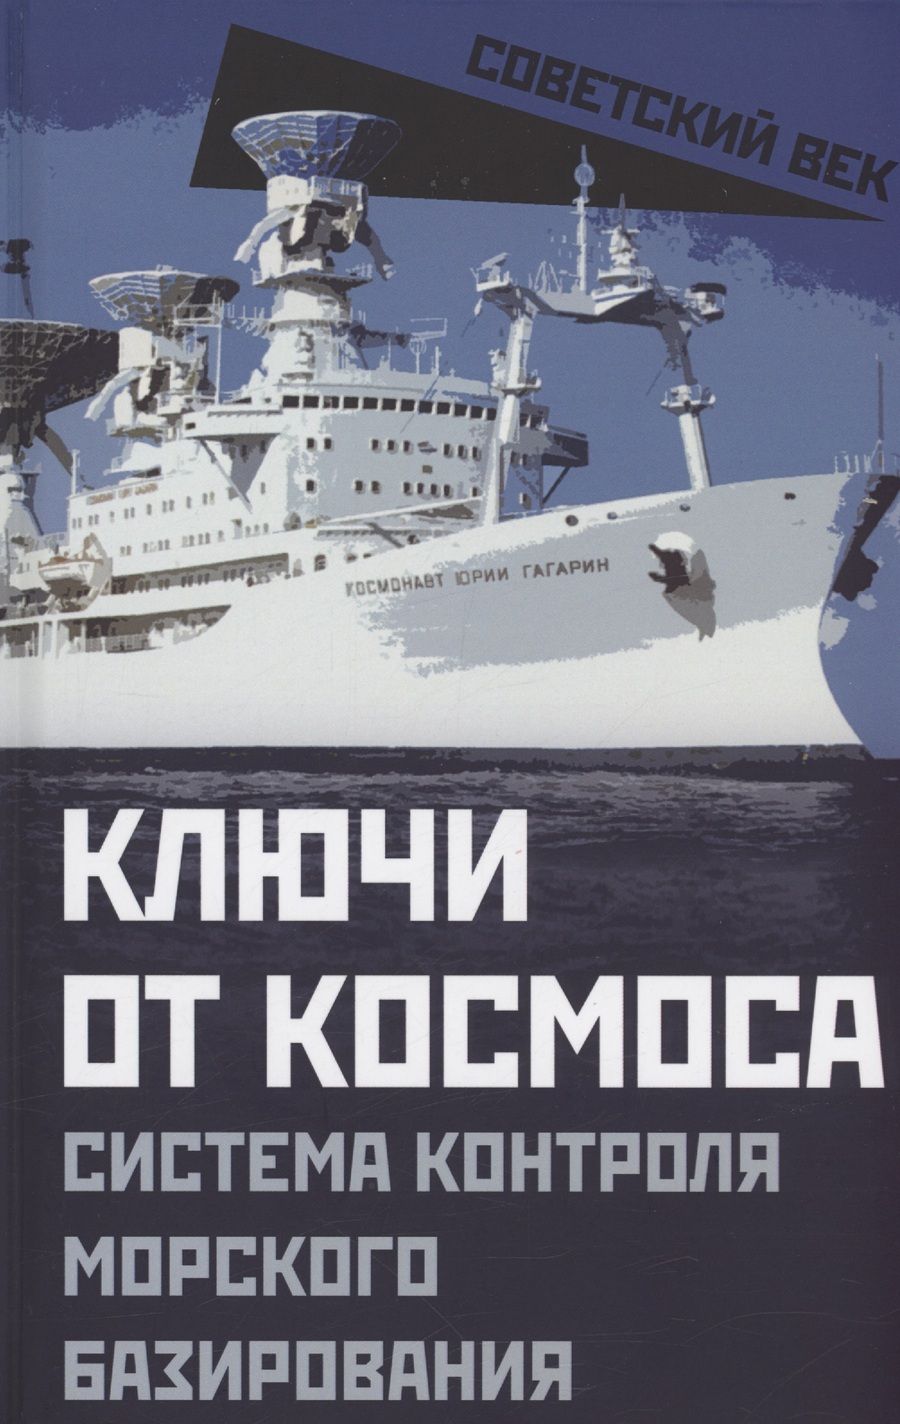 Обложка книги "Ключи от космоса. Система контроля морского базирования"